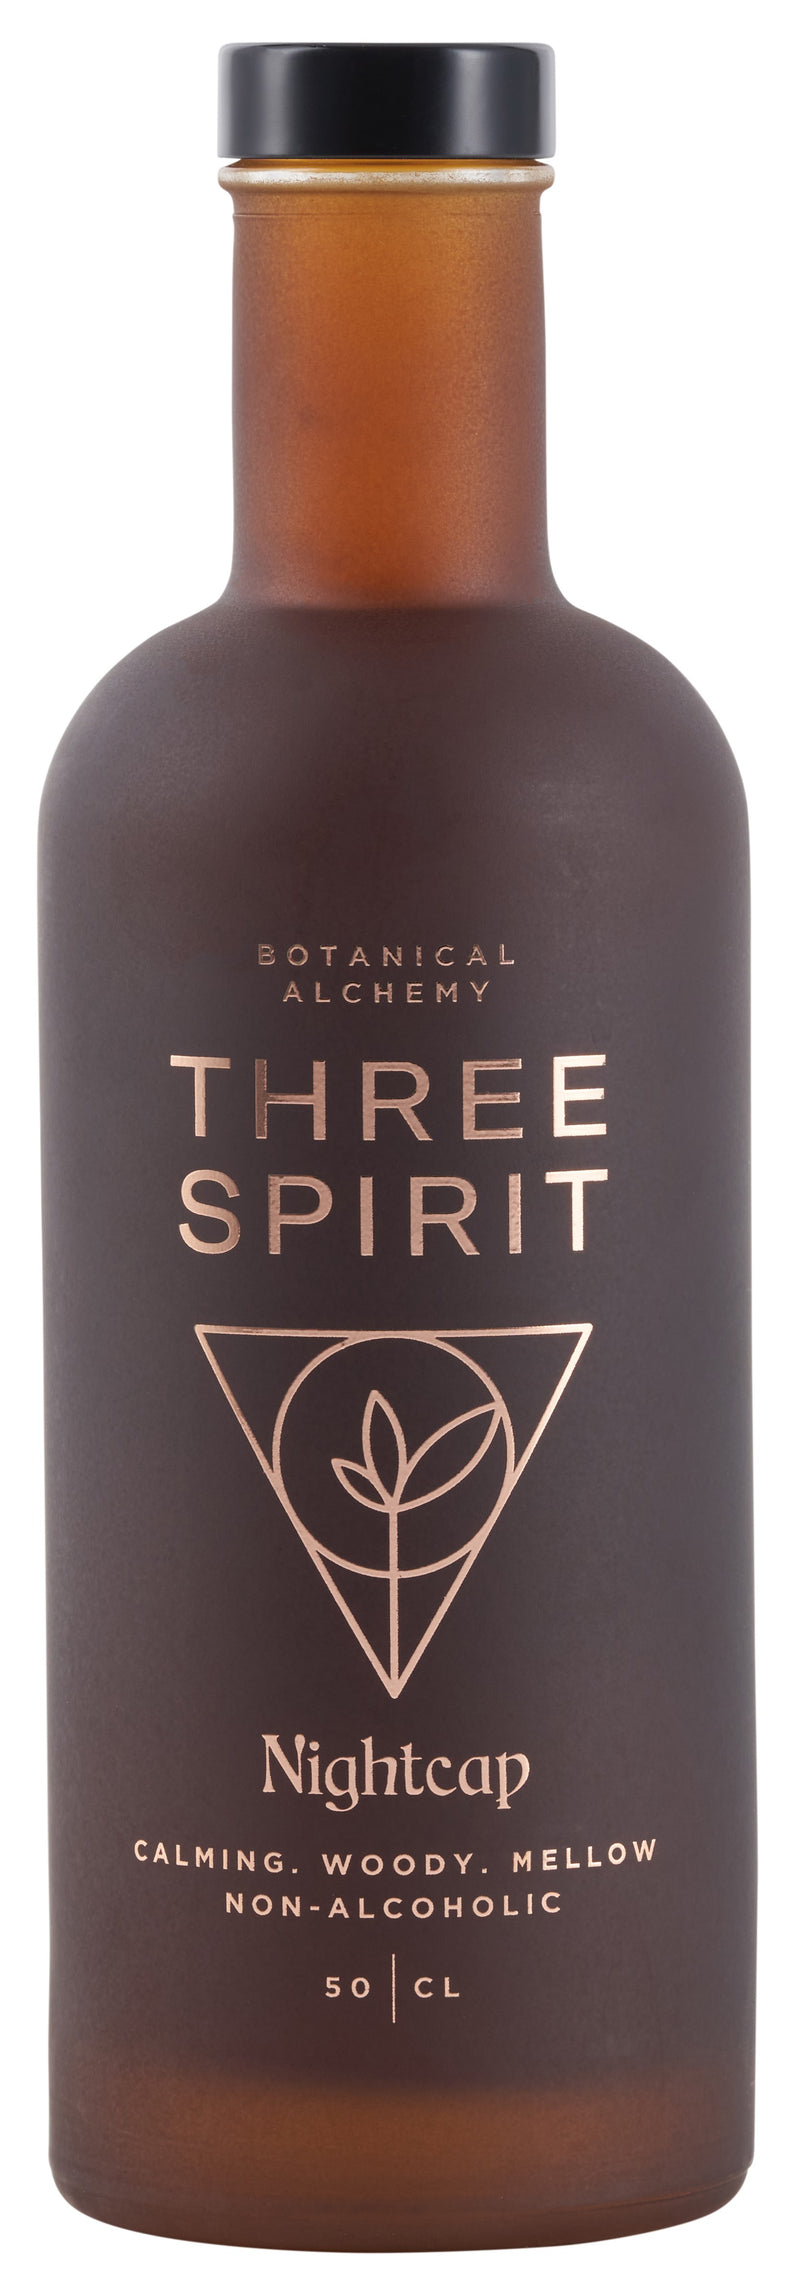 Three Spirit Nightcap 50cl